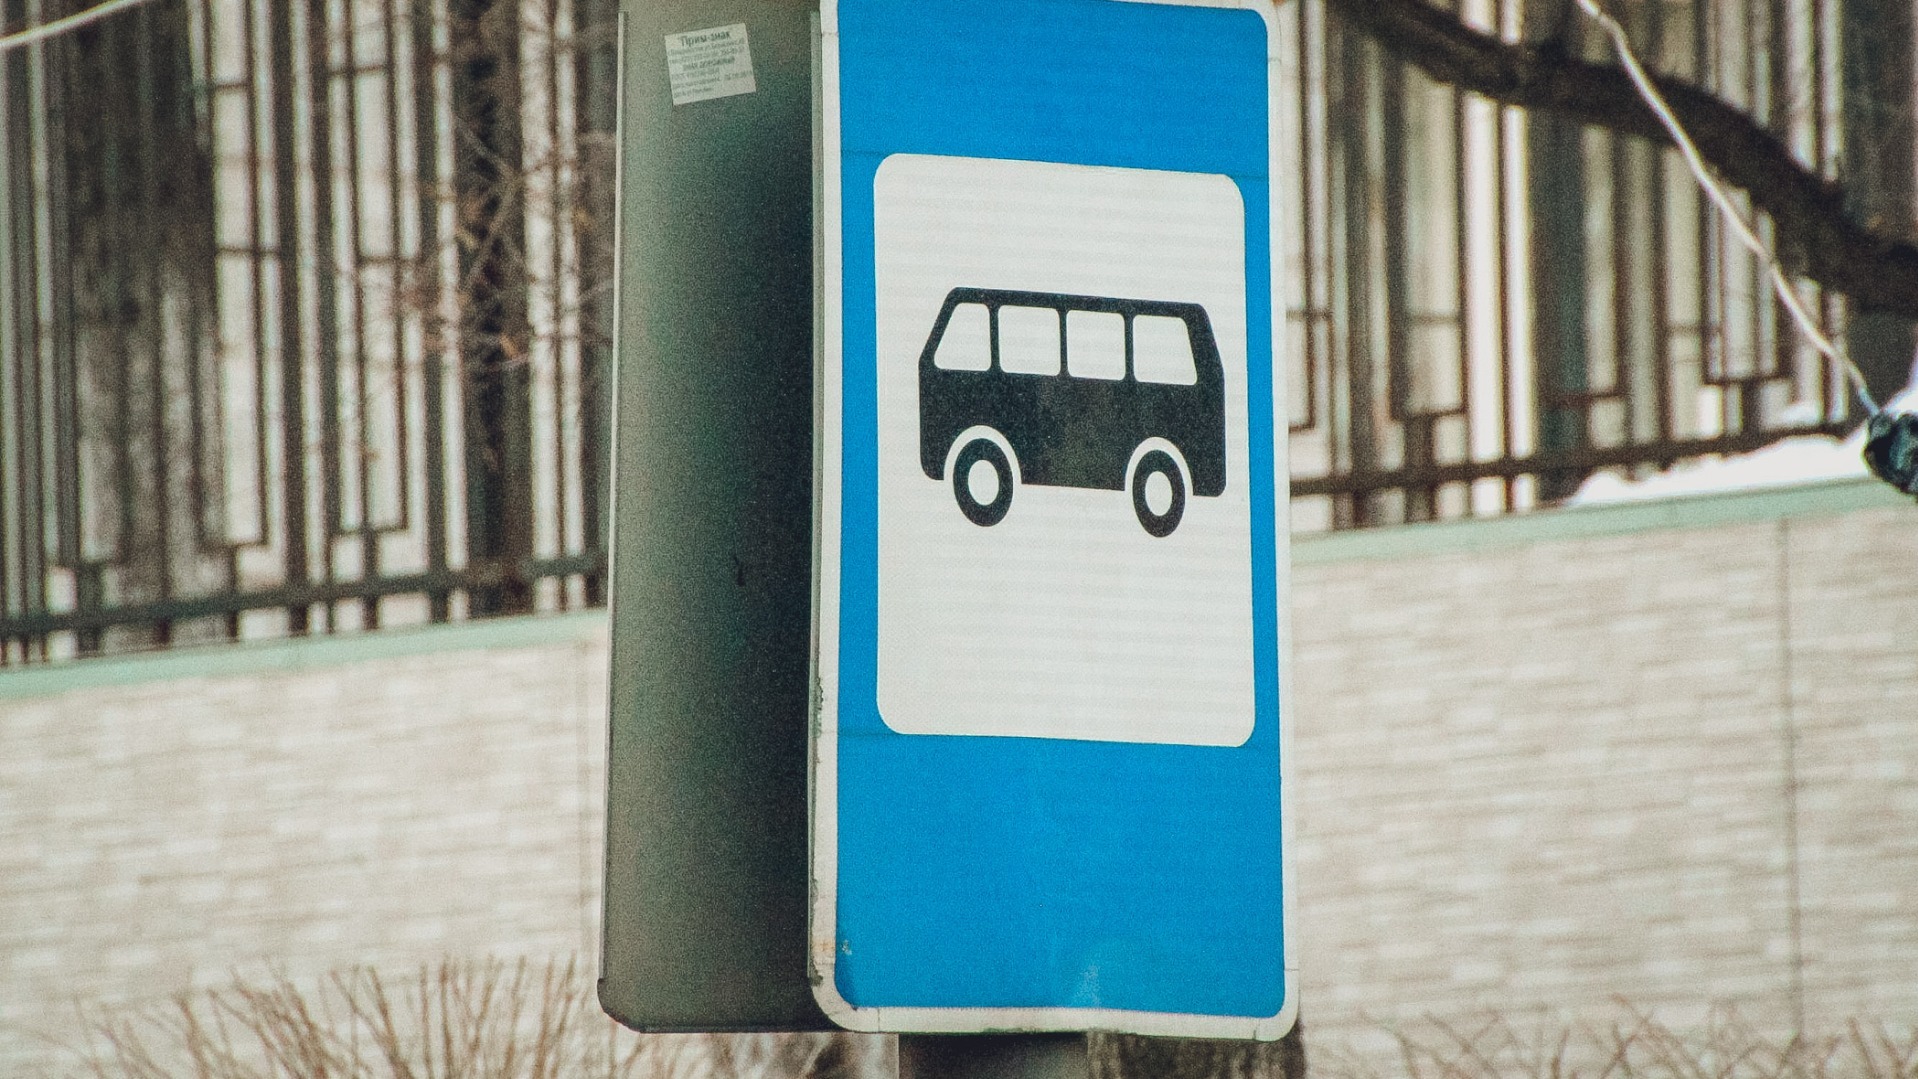 У ДК Лобкова в Омске запретят останавливаться автобусам